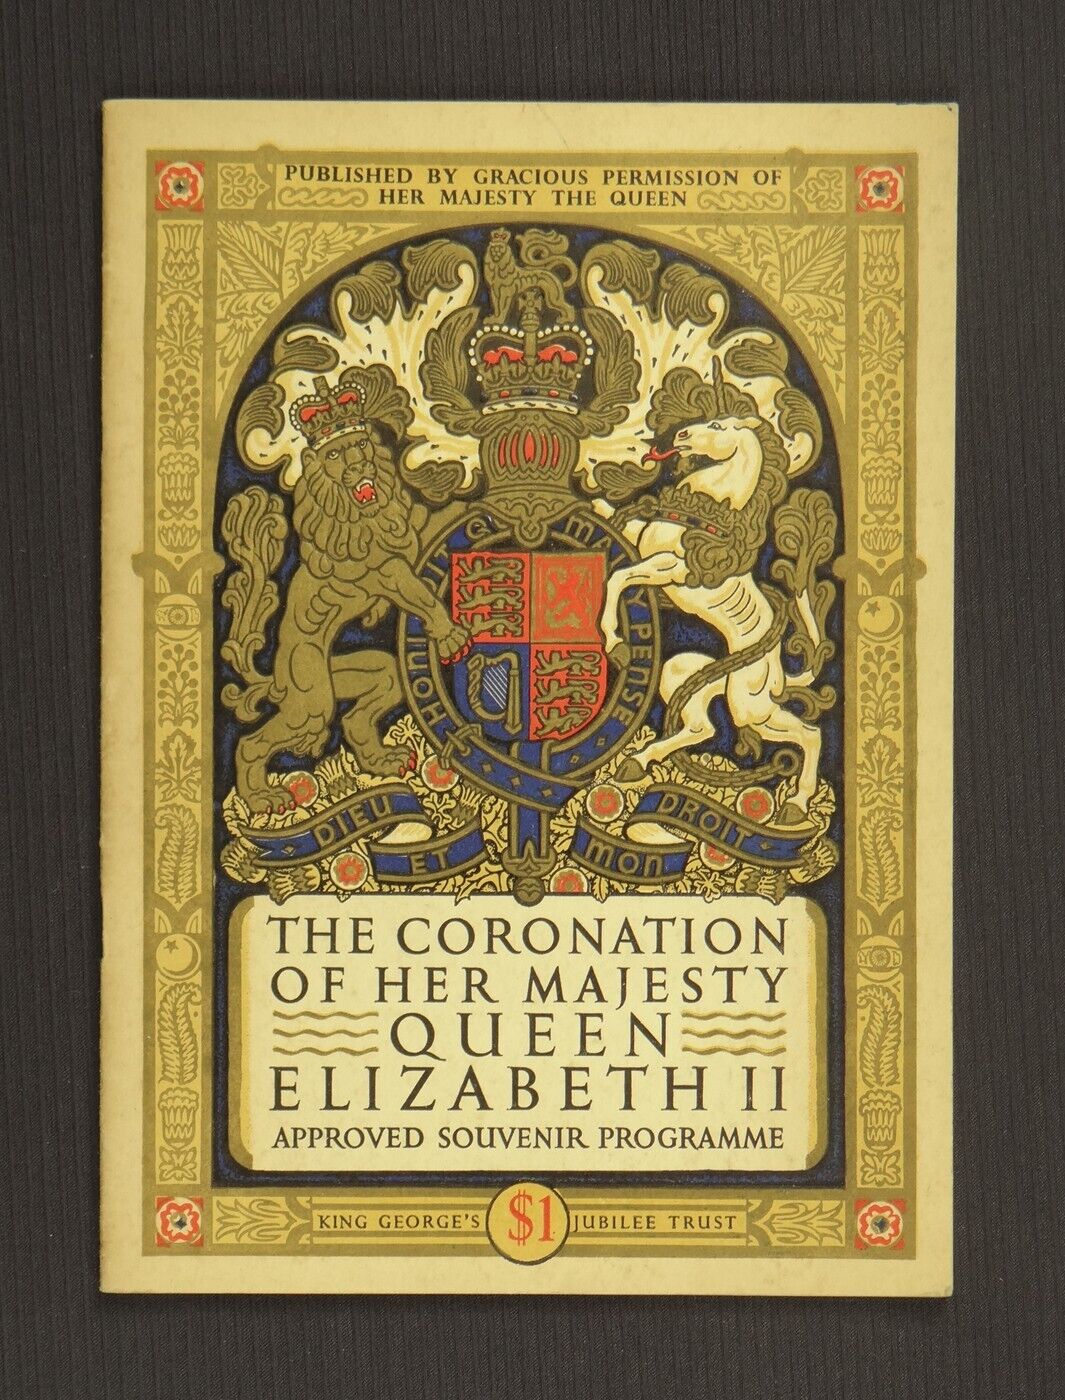 The Coronation of Her Majesty Queen Elizabeth II Souvenir Program, 2-June-1953